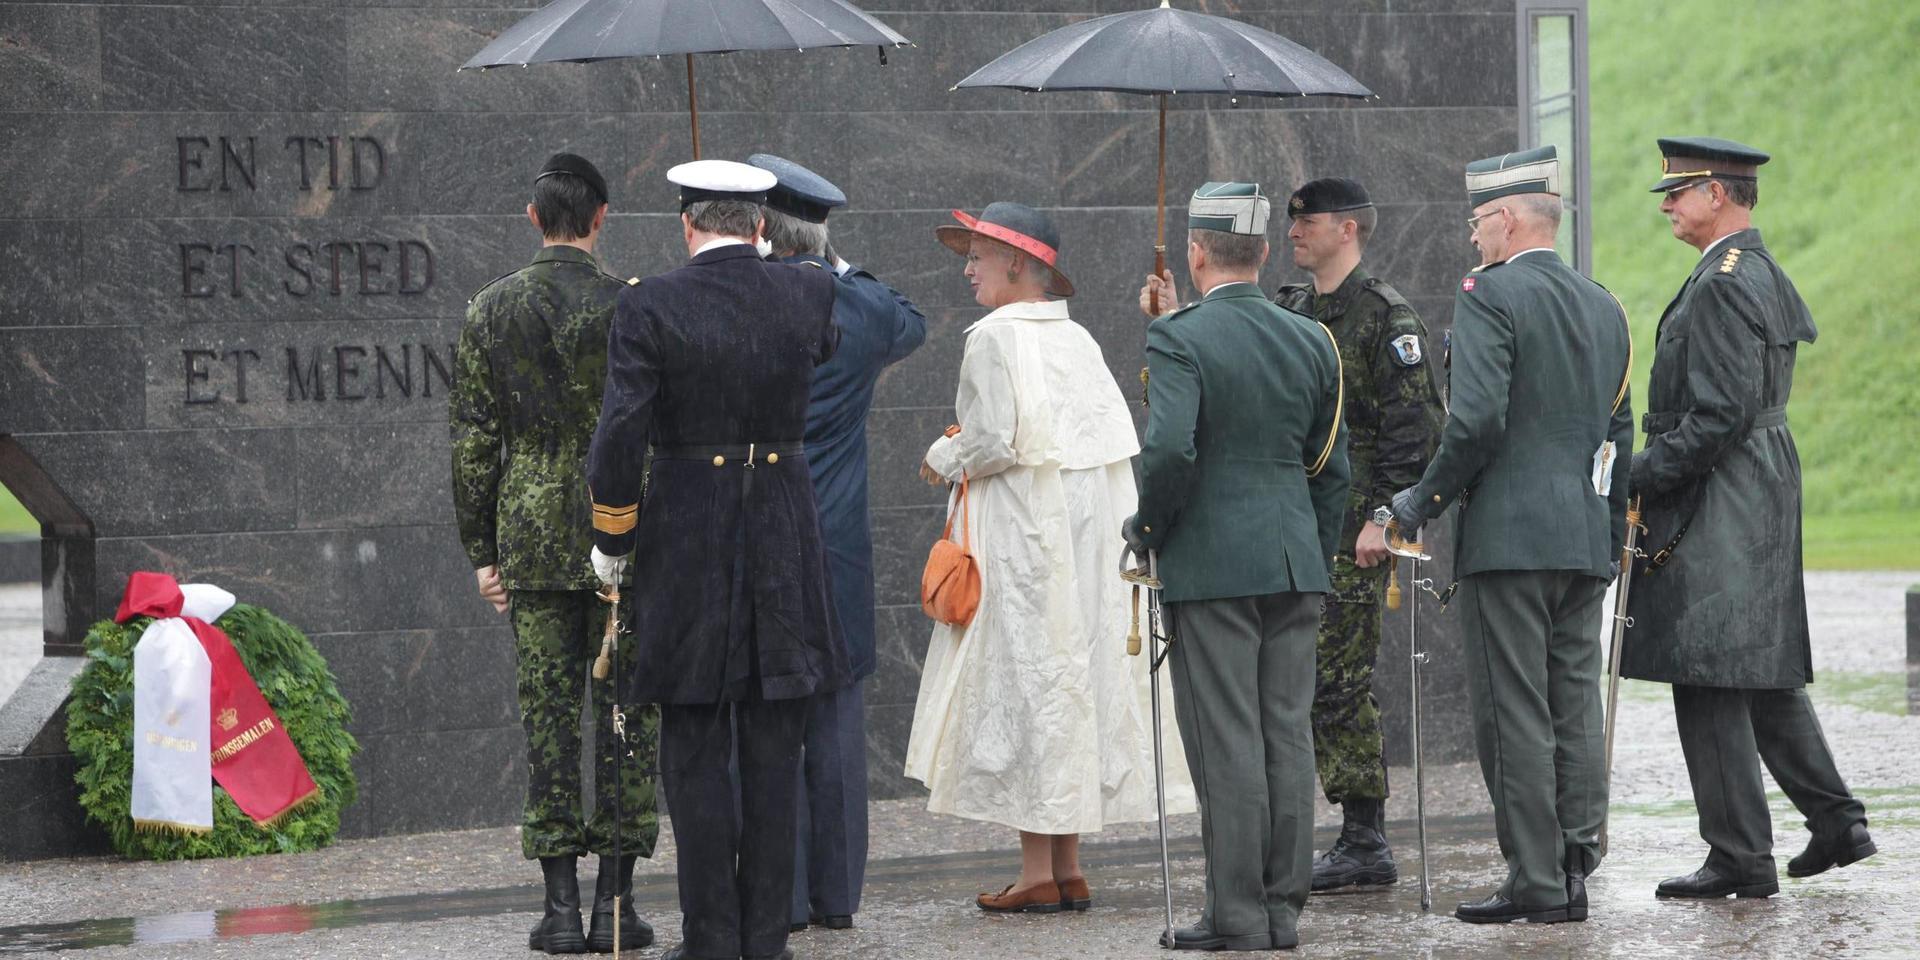 Danmarks drottning Margrethe vid invigningen av ett minnesmonument till de danska soldater som dött i Afghanistan, 2011. Arkivbild.